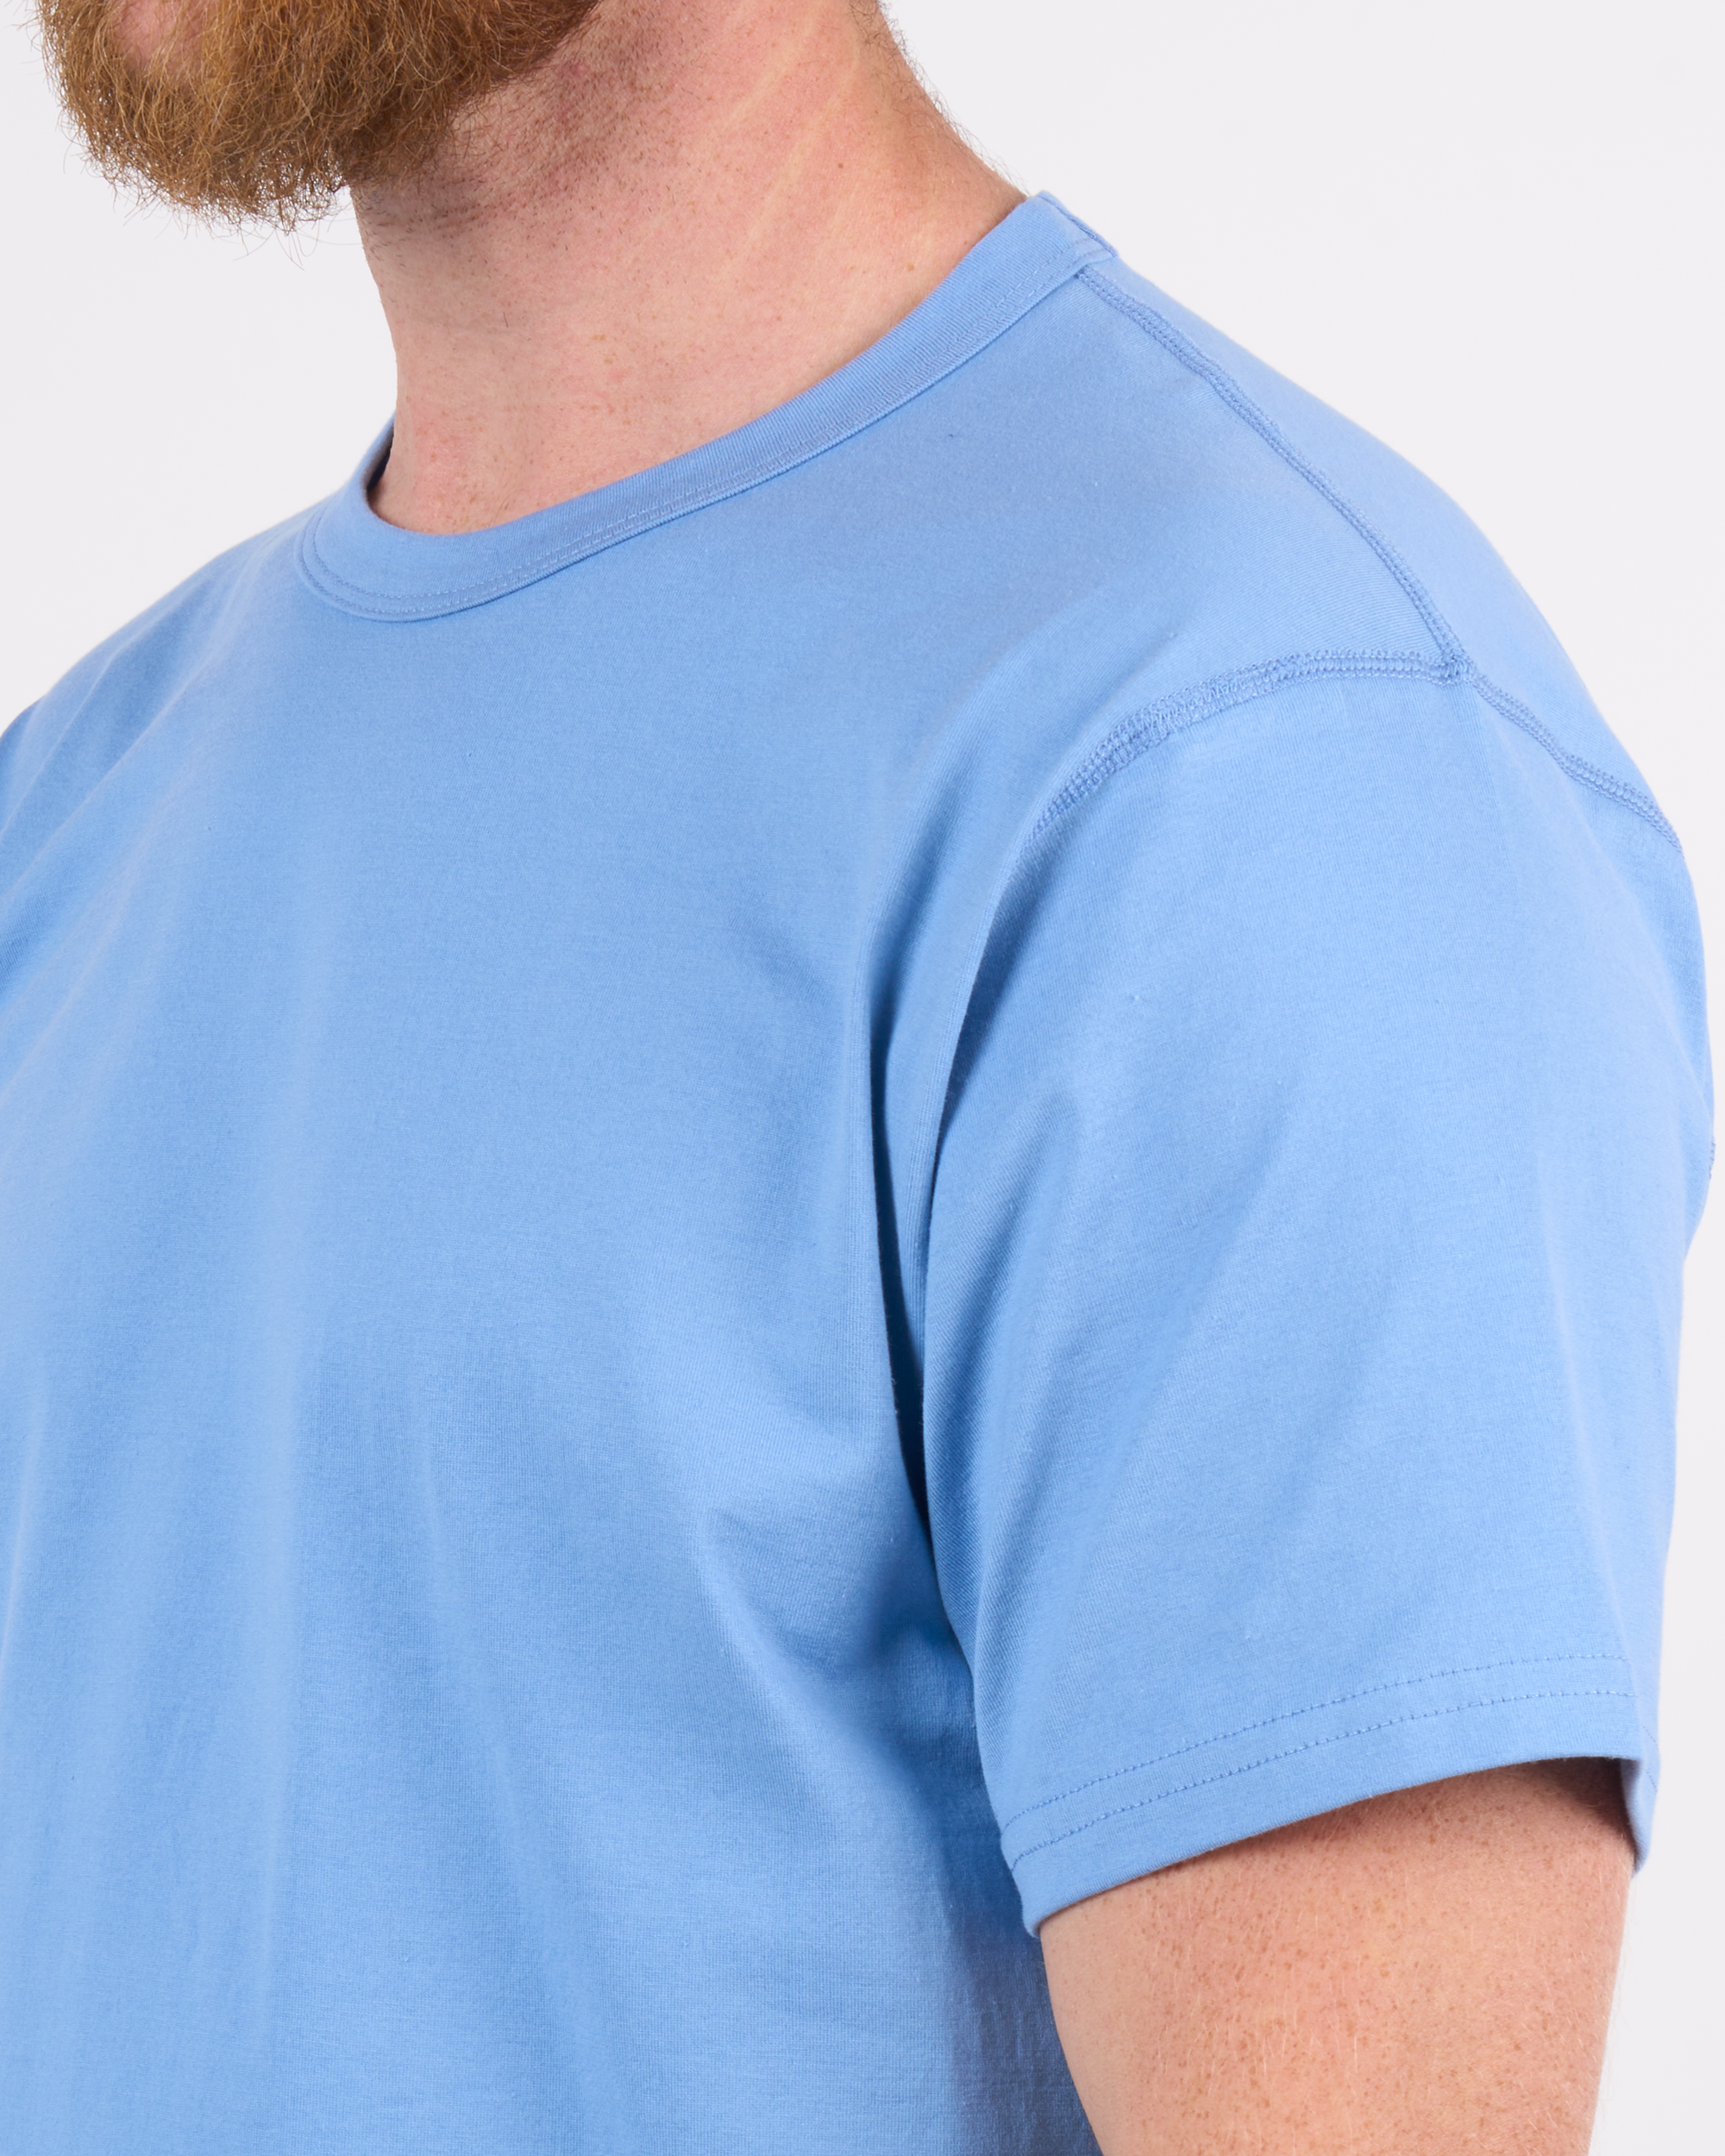 Foreign Rider Co Supima Cotton Surf Blue Short Sleeve T-Shirt Shoulder Flat-lock Stitch Detail